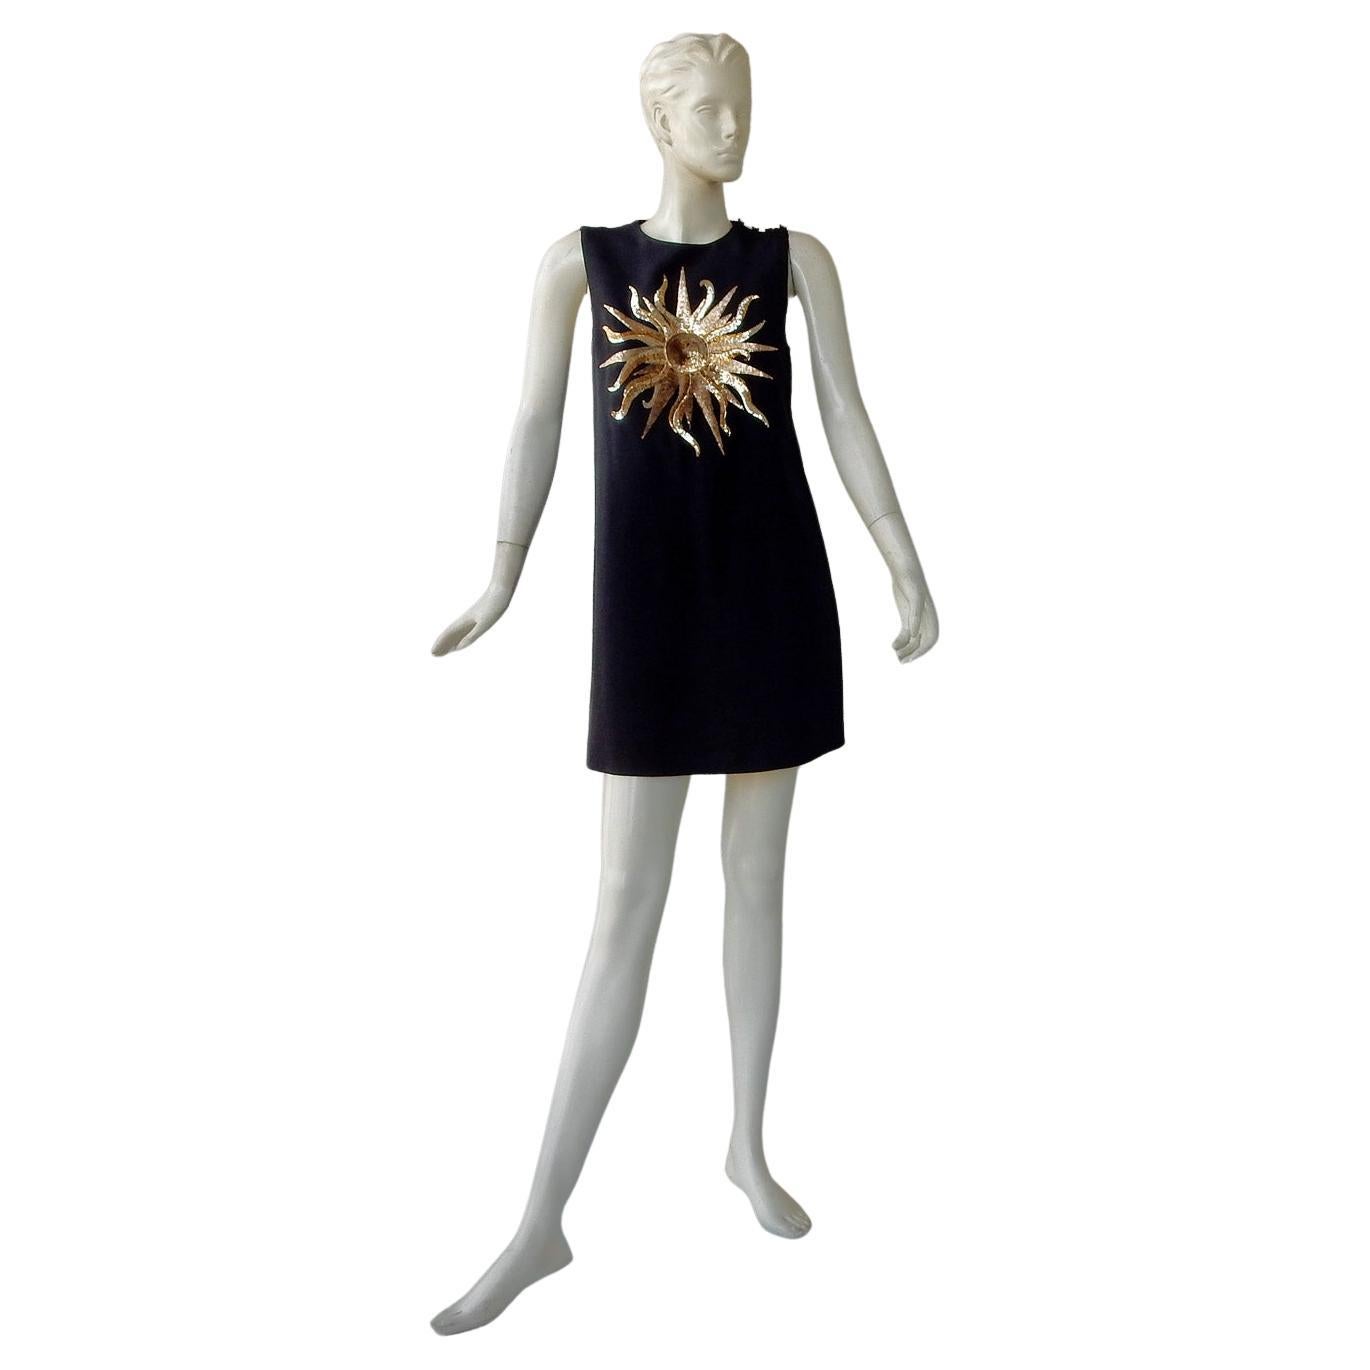 Schiaparelli Iconic Christian Berard "Sunburst" Mini Dress 